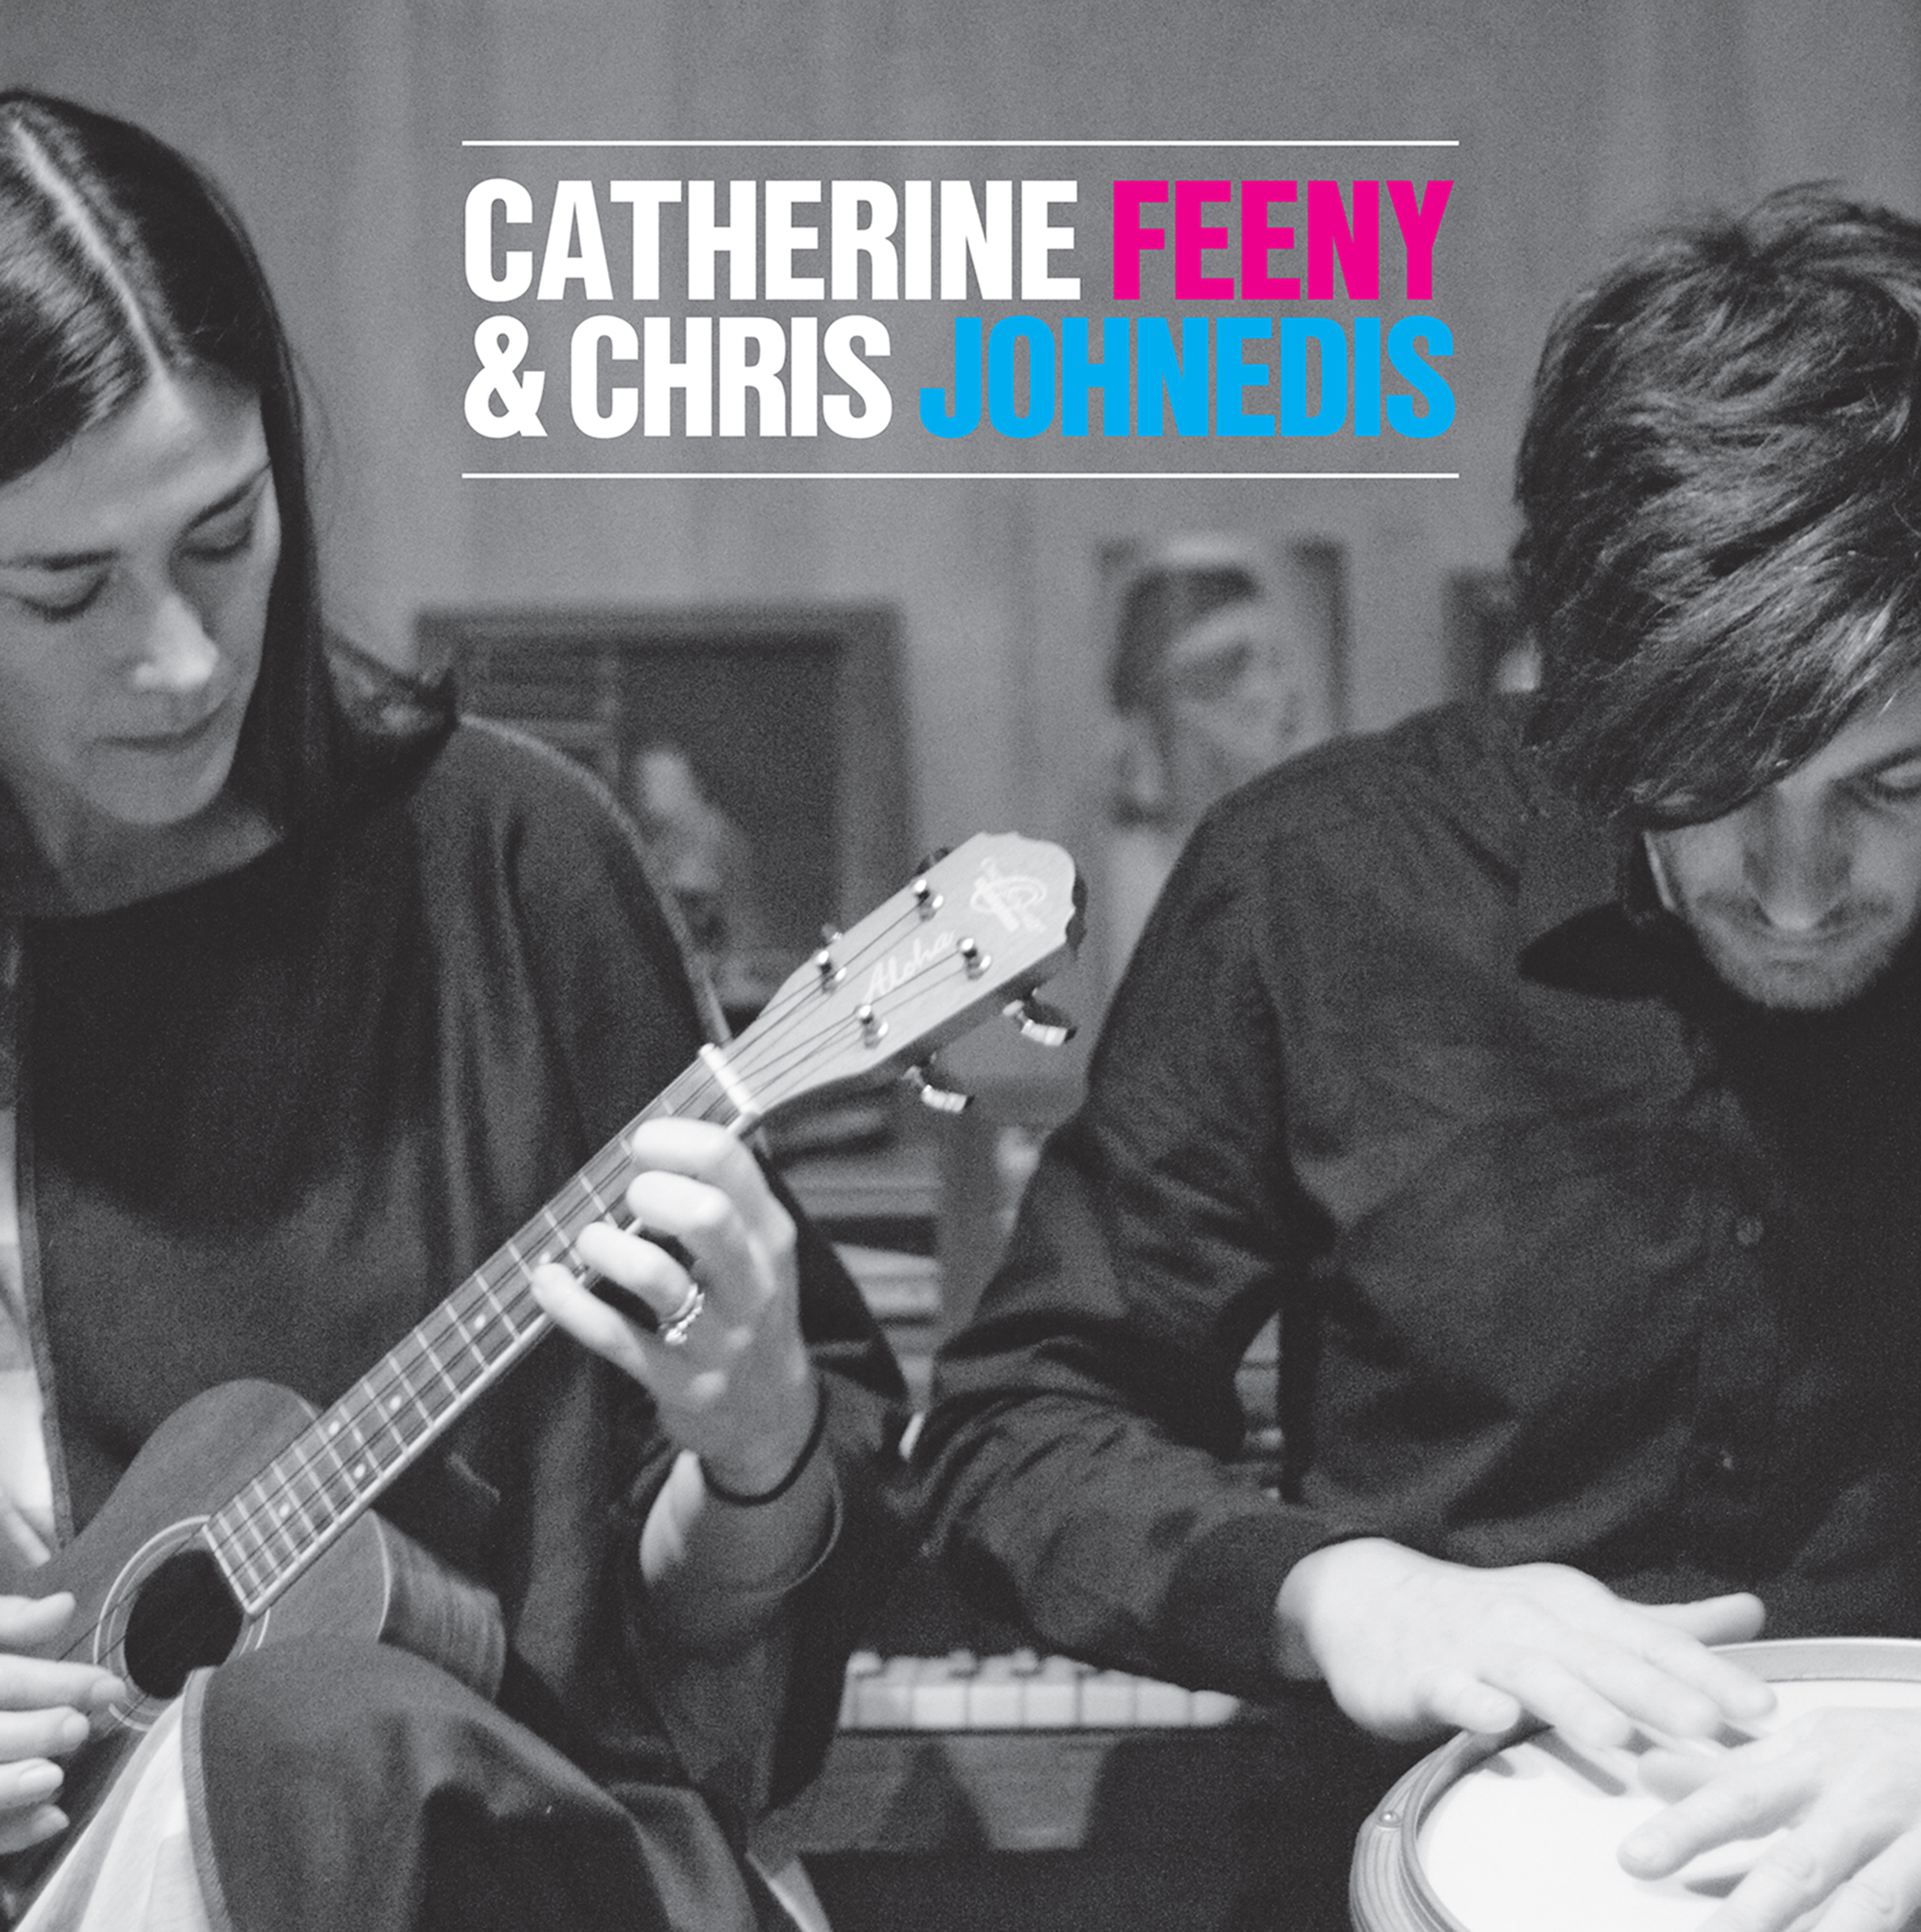 Catherine Feeny & Chris Johnedis debut album available now!